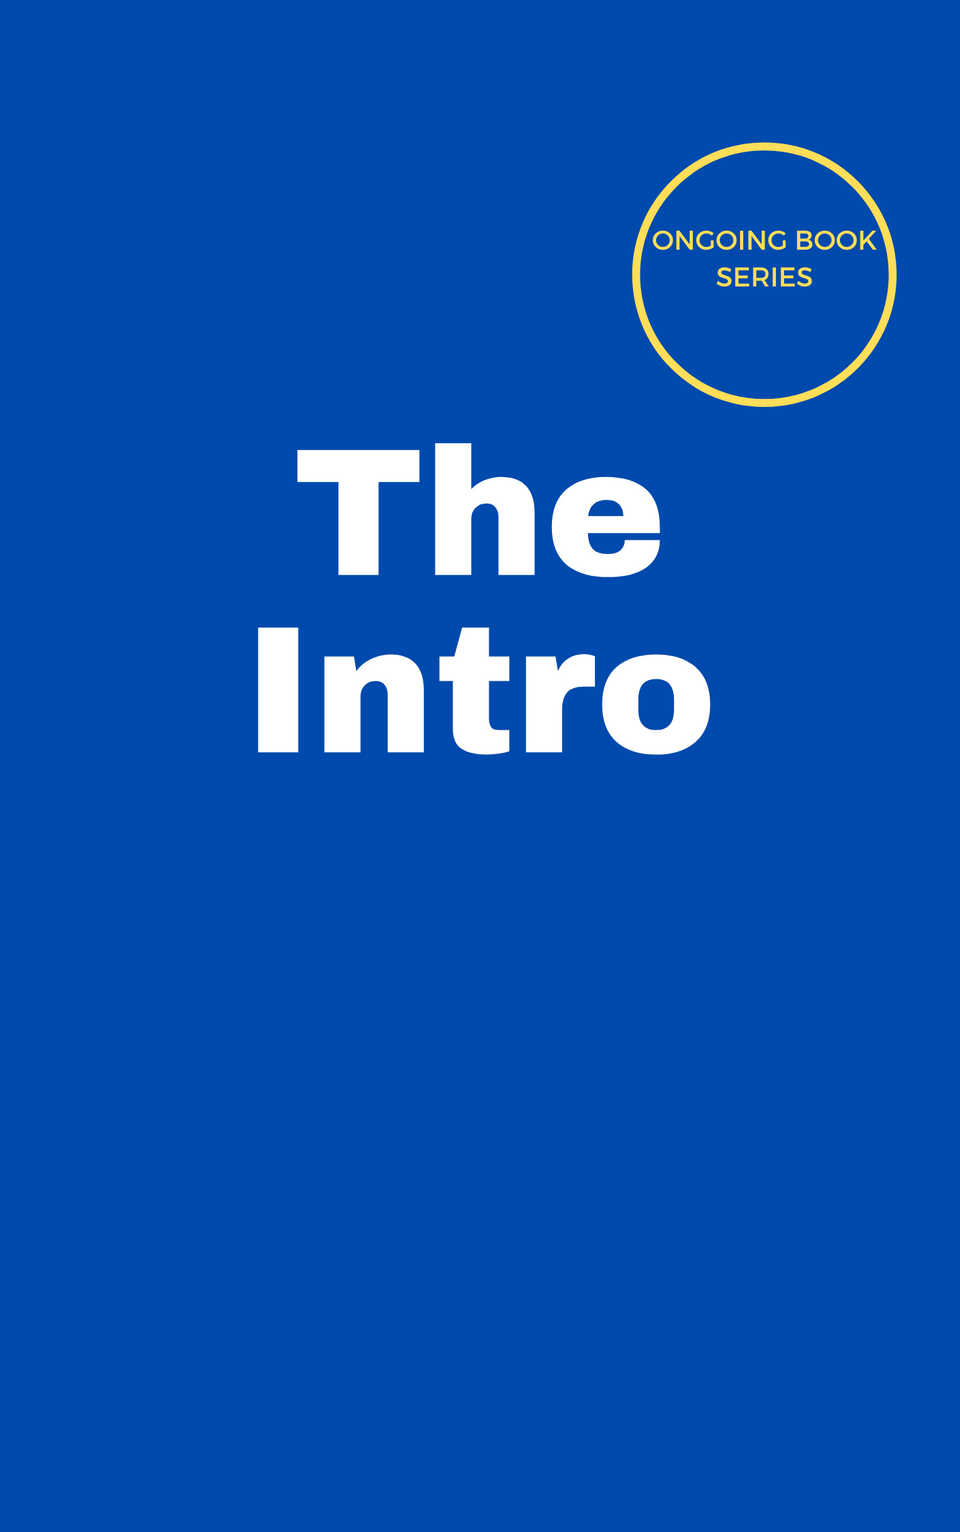 The Book: The Intro